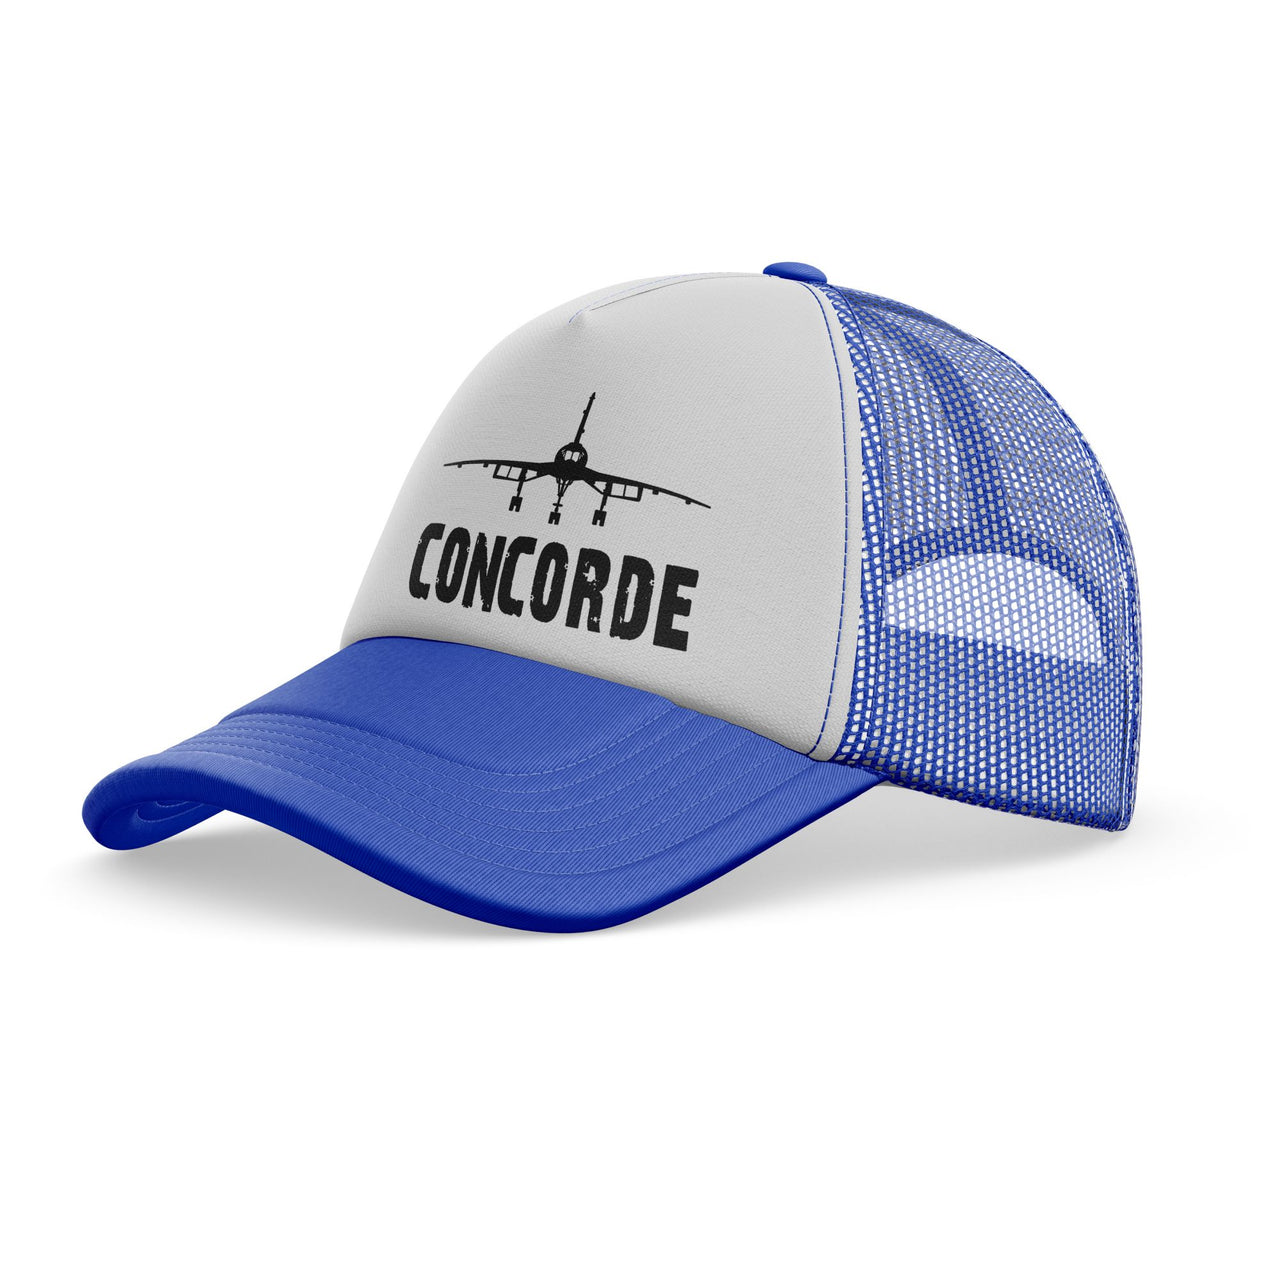 Concorde & Plane Designed Trucker Caps & Hats